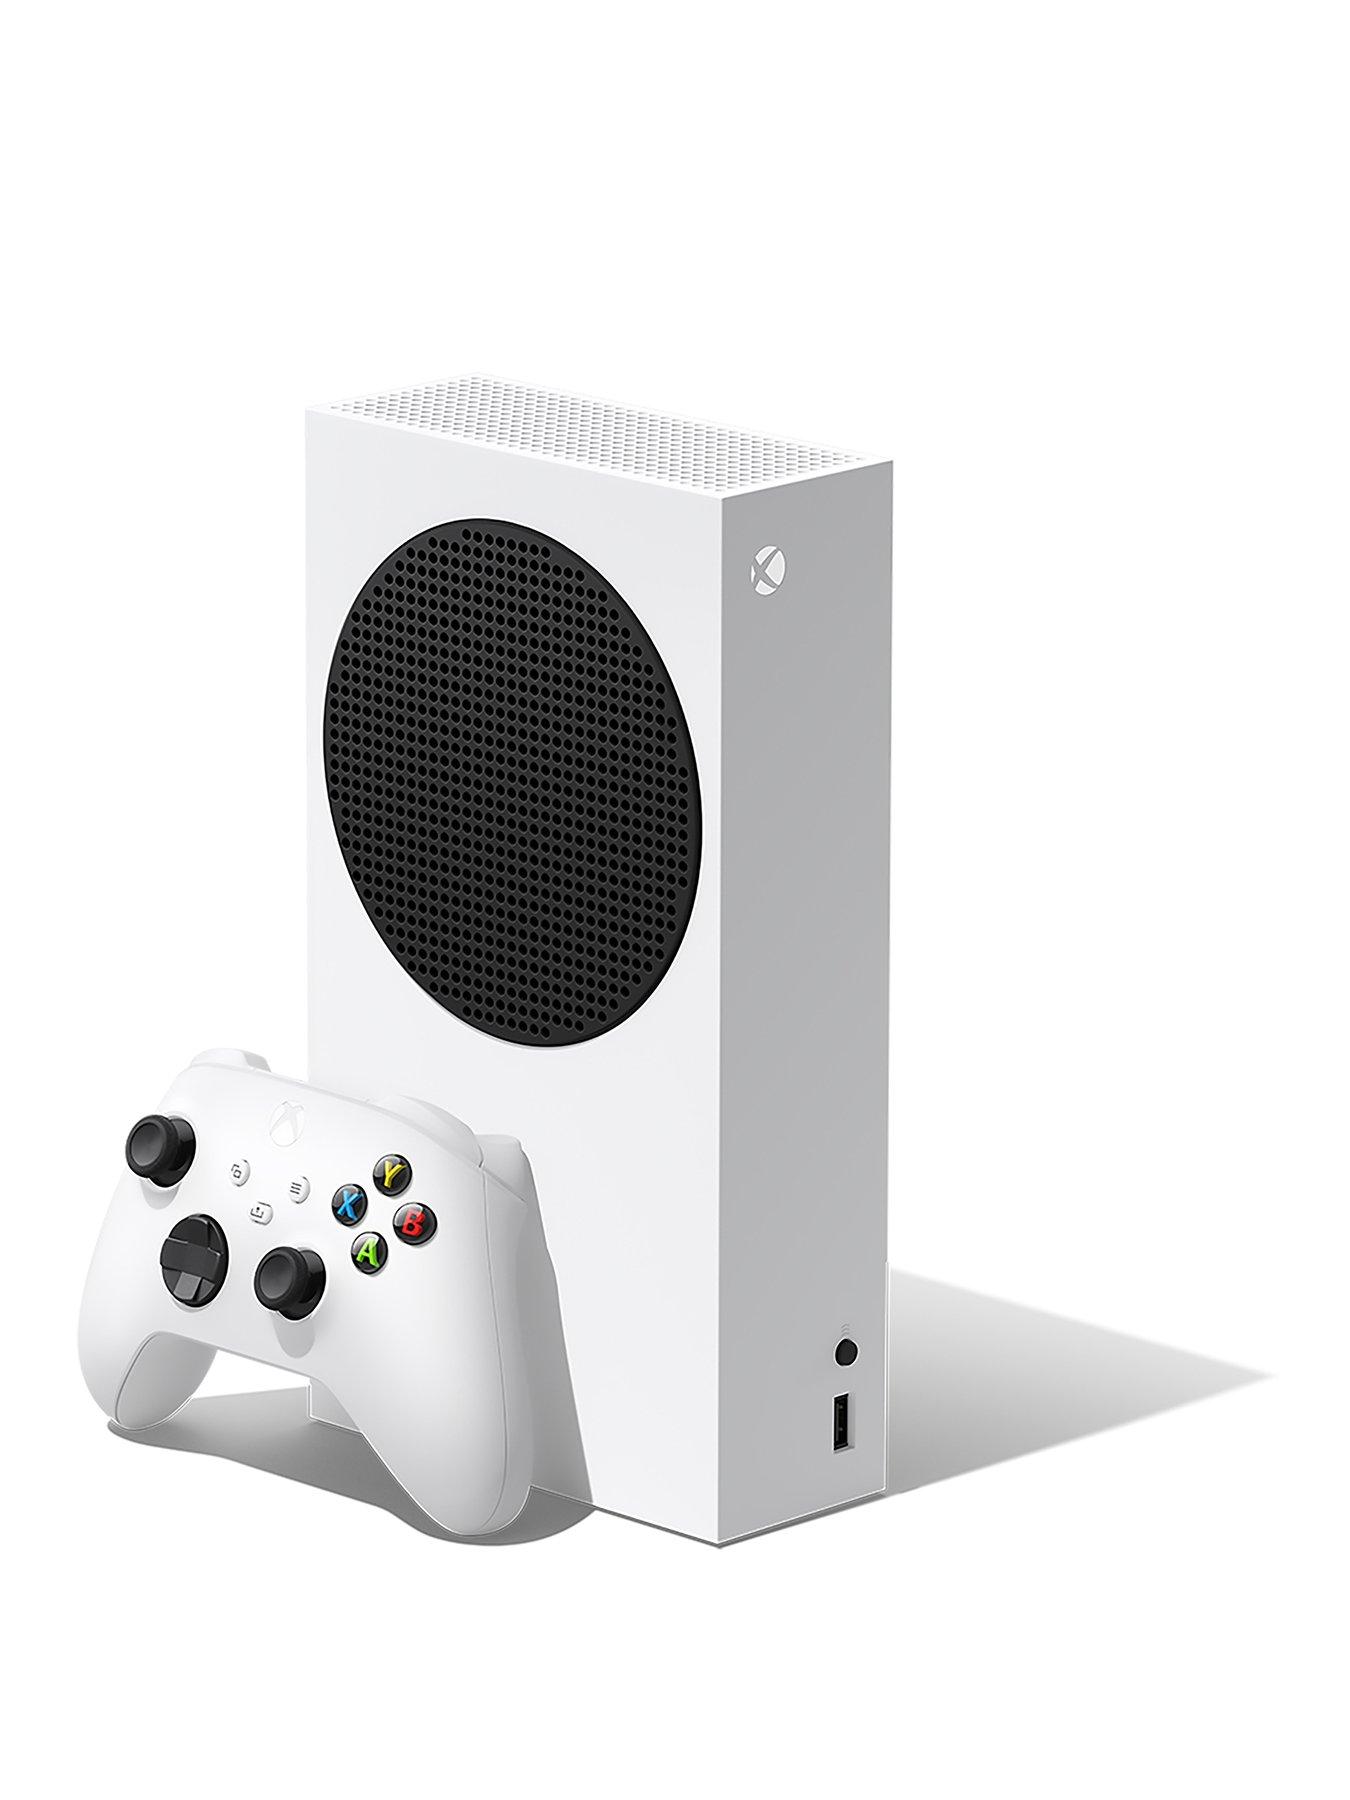  Xbox One S 500GB Console - Forza Horizon 3 Hot Wheels Bundle  [Discontinued] : Electronics